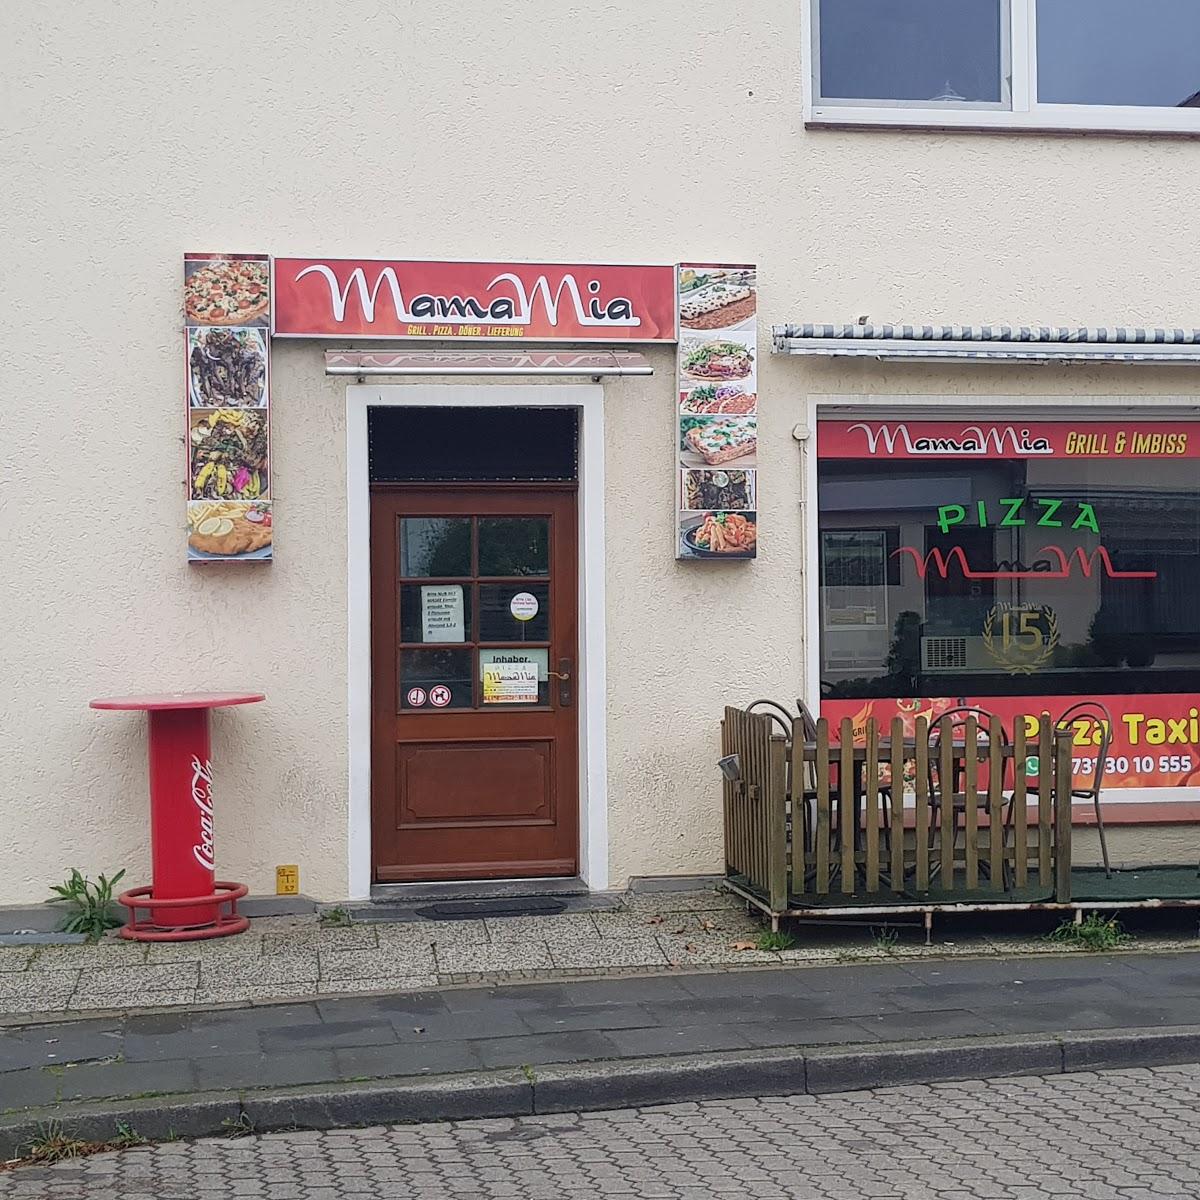 Restaurant "Pizza Mama Mia" in Bad Oeynhausen